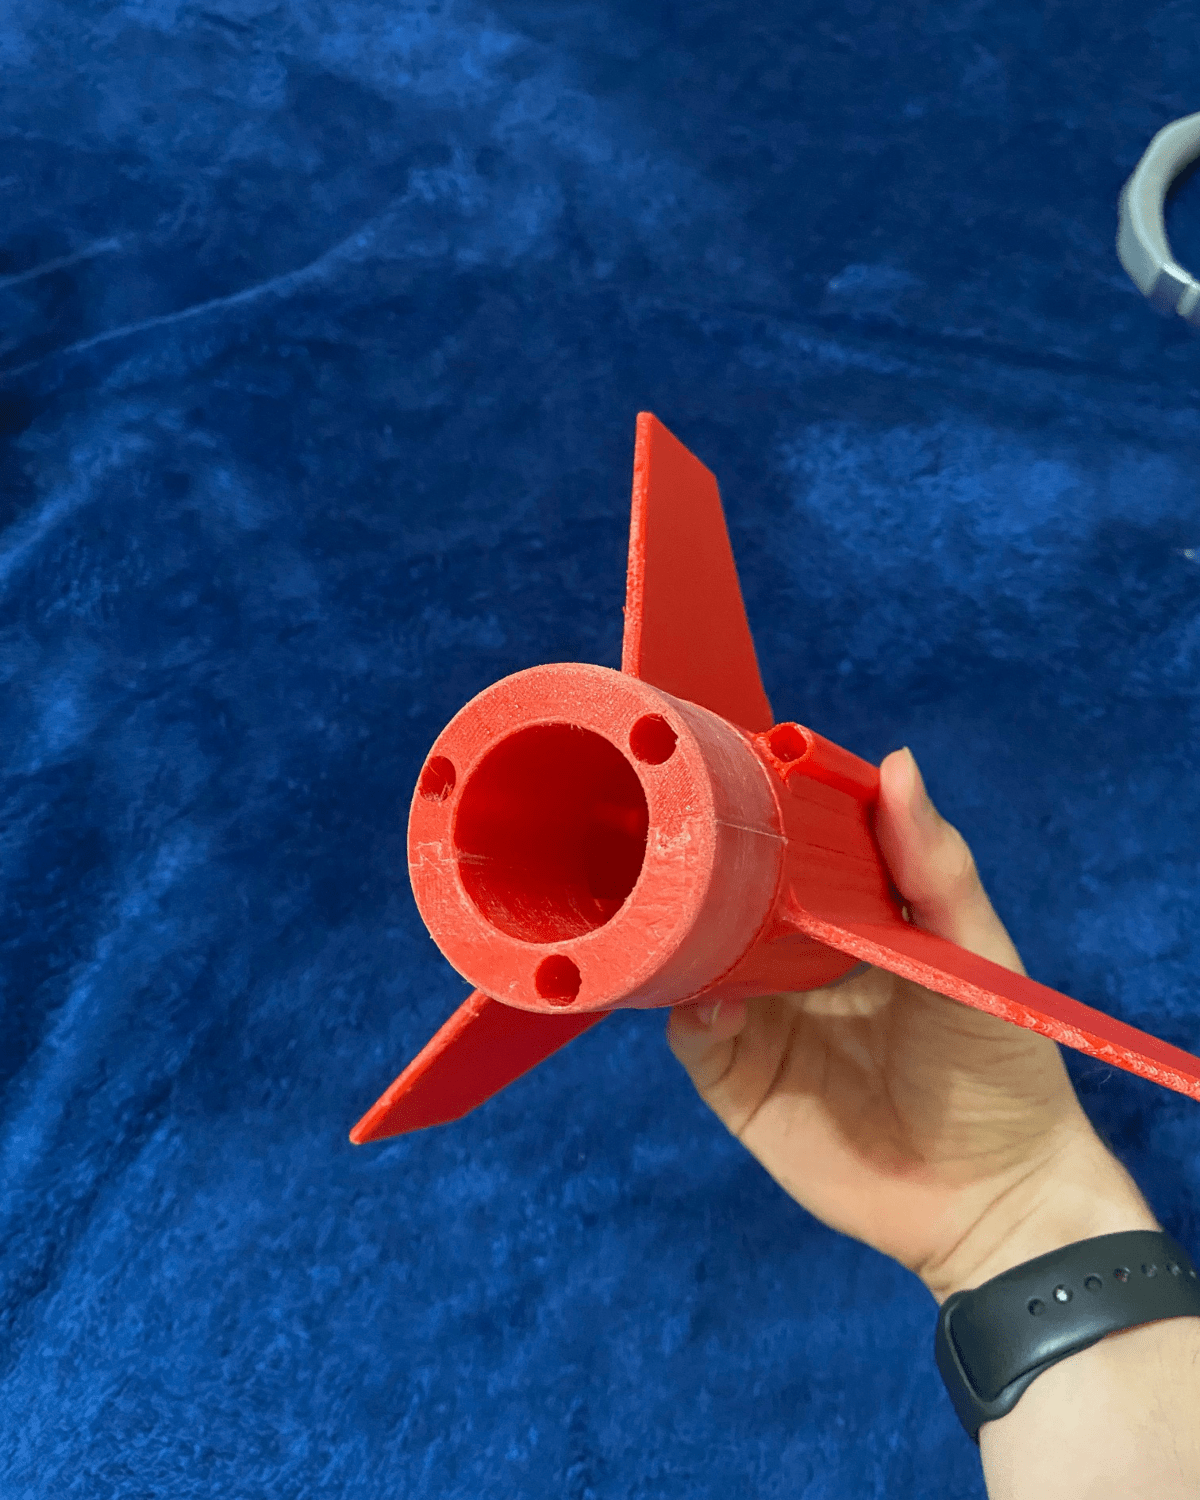 Jacob Zahabi shows one of the rocket fin caps he created with a 3D printer. (Photo: Jacob Zahabi)